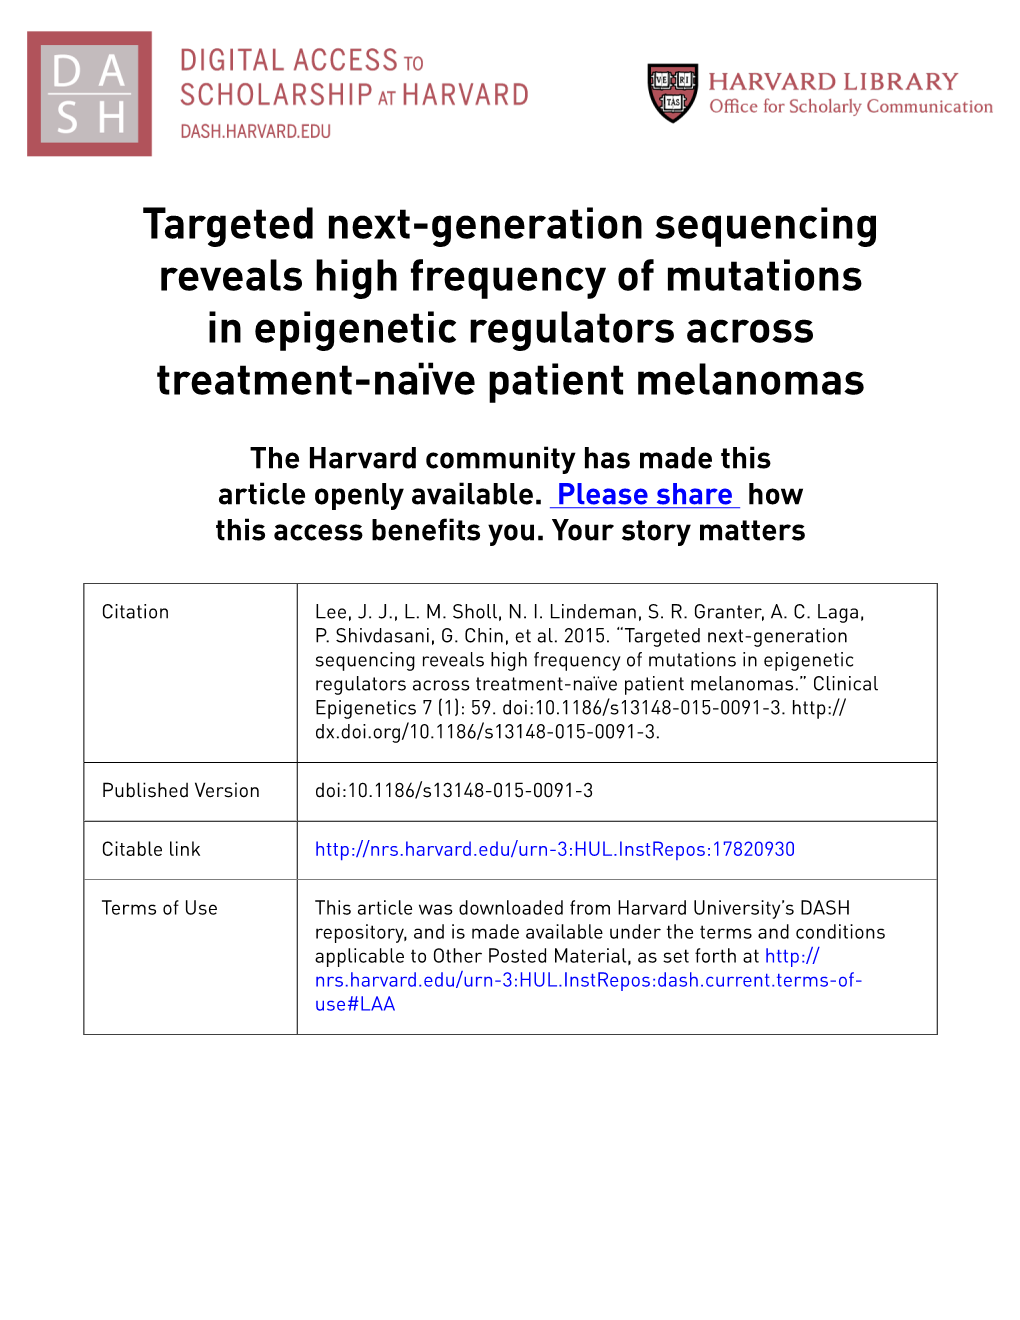 Targeted Next-Generation Sequencing Reveals High Frequency of Mutations in Epigenetic Regulators Across Treatment-Naïve Patient Melanomas